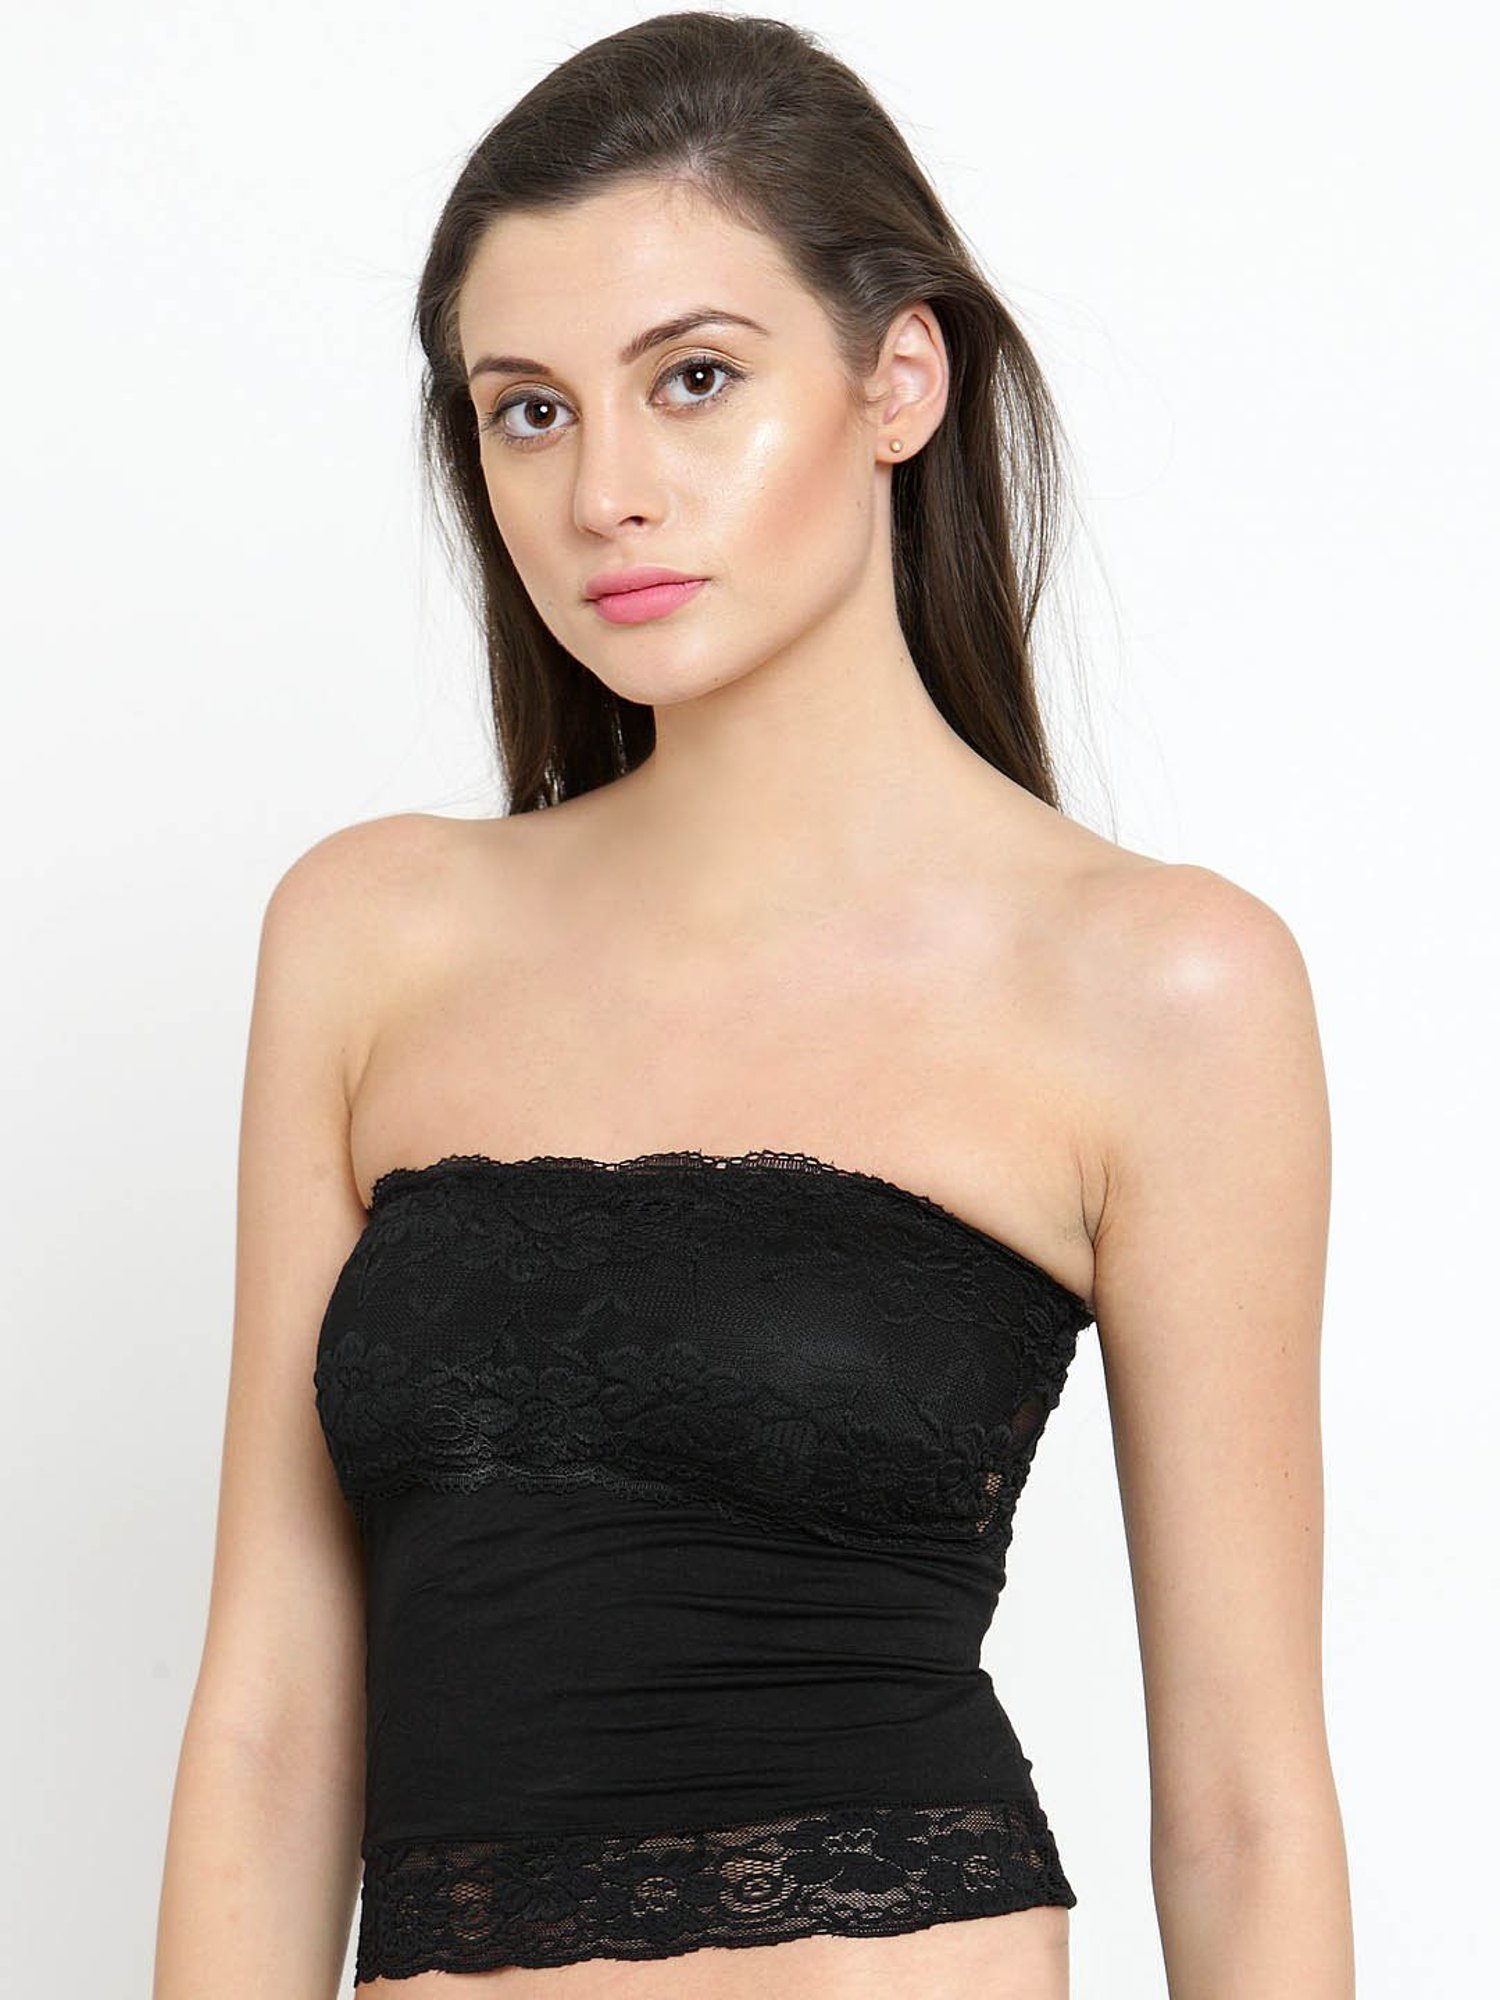 Buy PrettyCat Black Non Wired Padded Bralette for Women Online